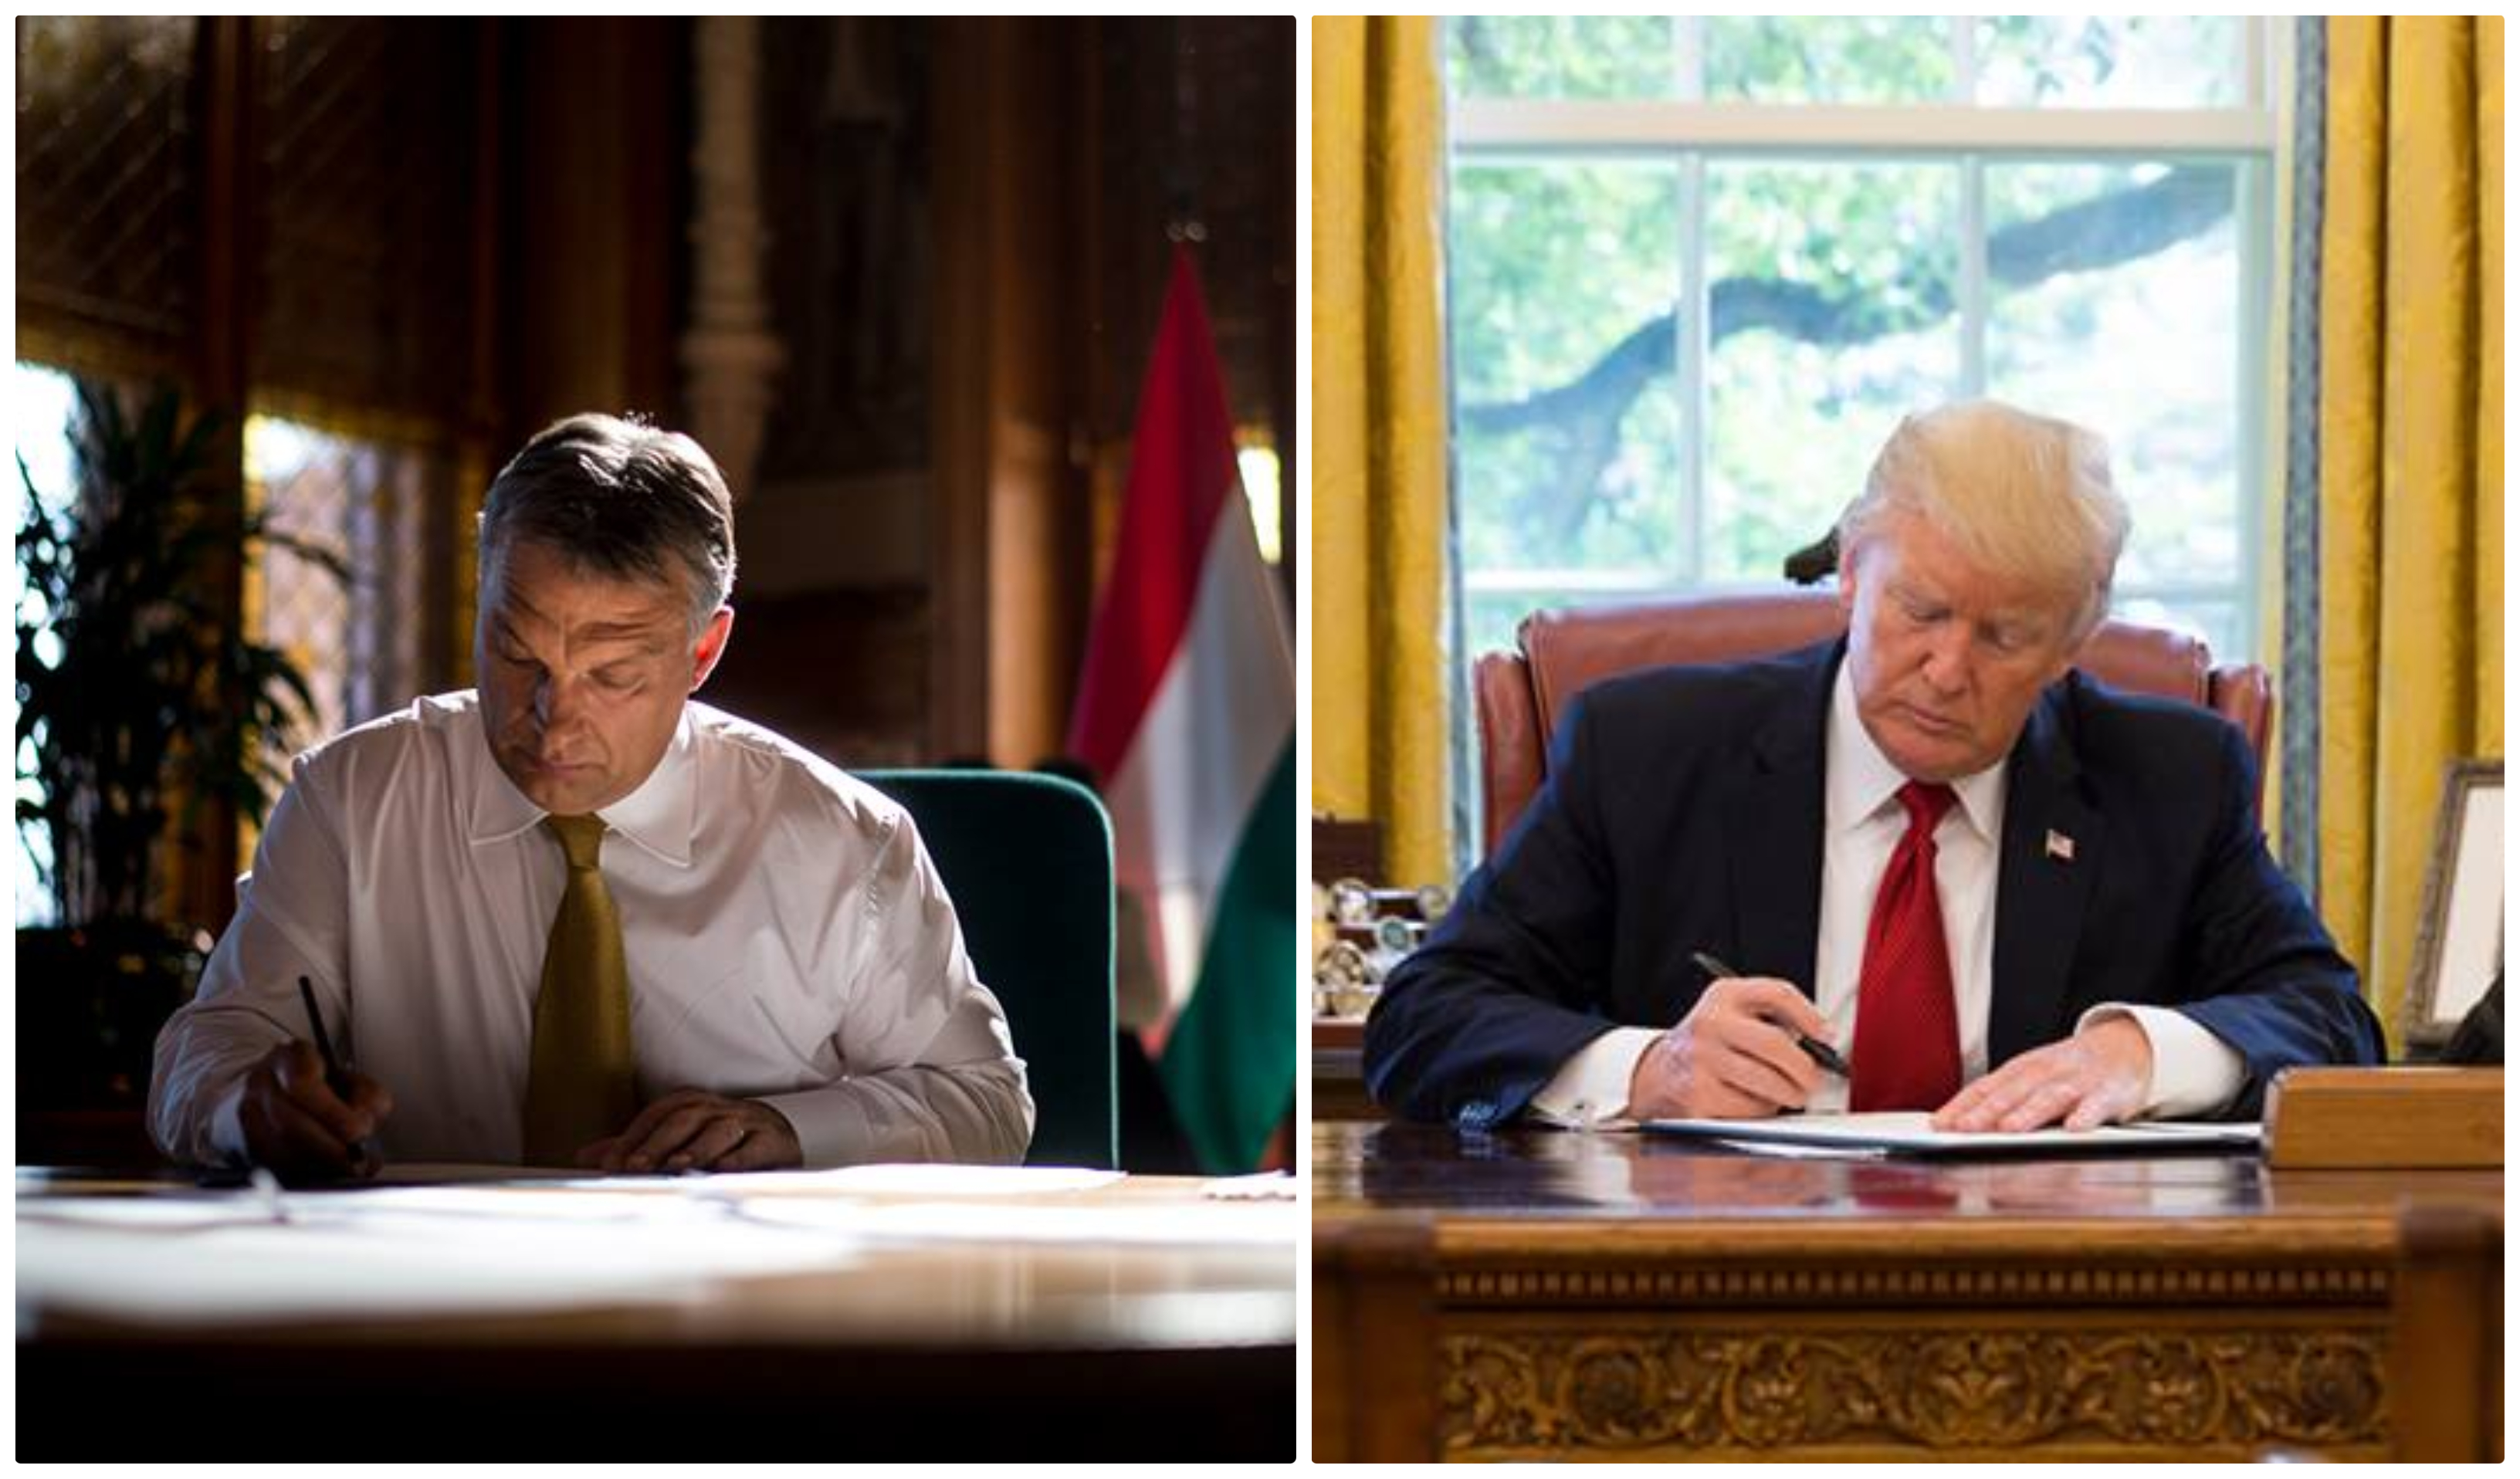 orbán and trump at desk